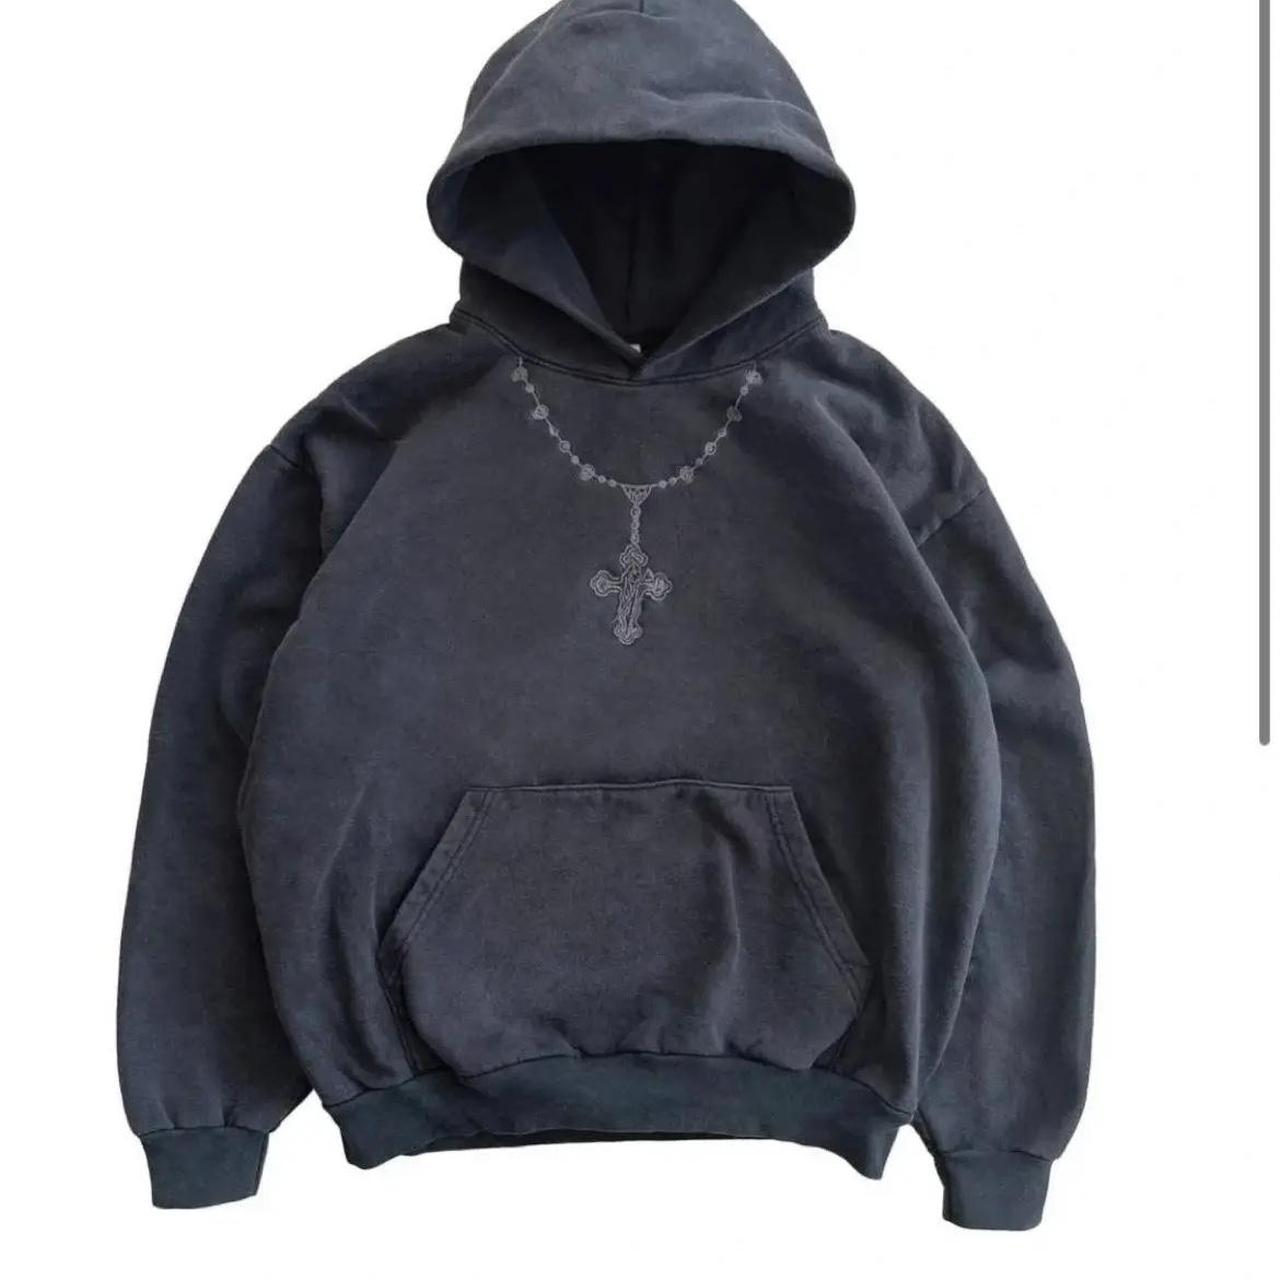 Warren Lotas Reaper Rosary hoodie from the 8/11...